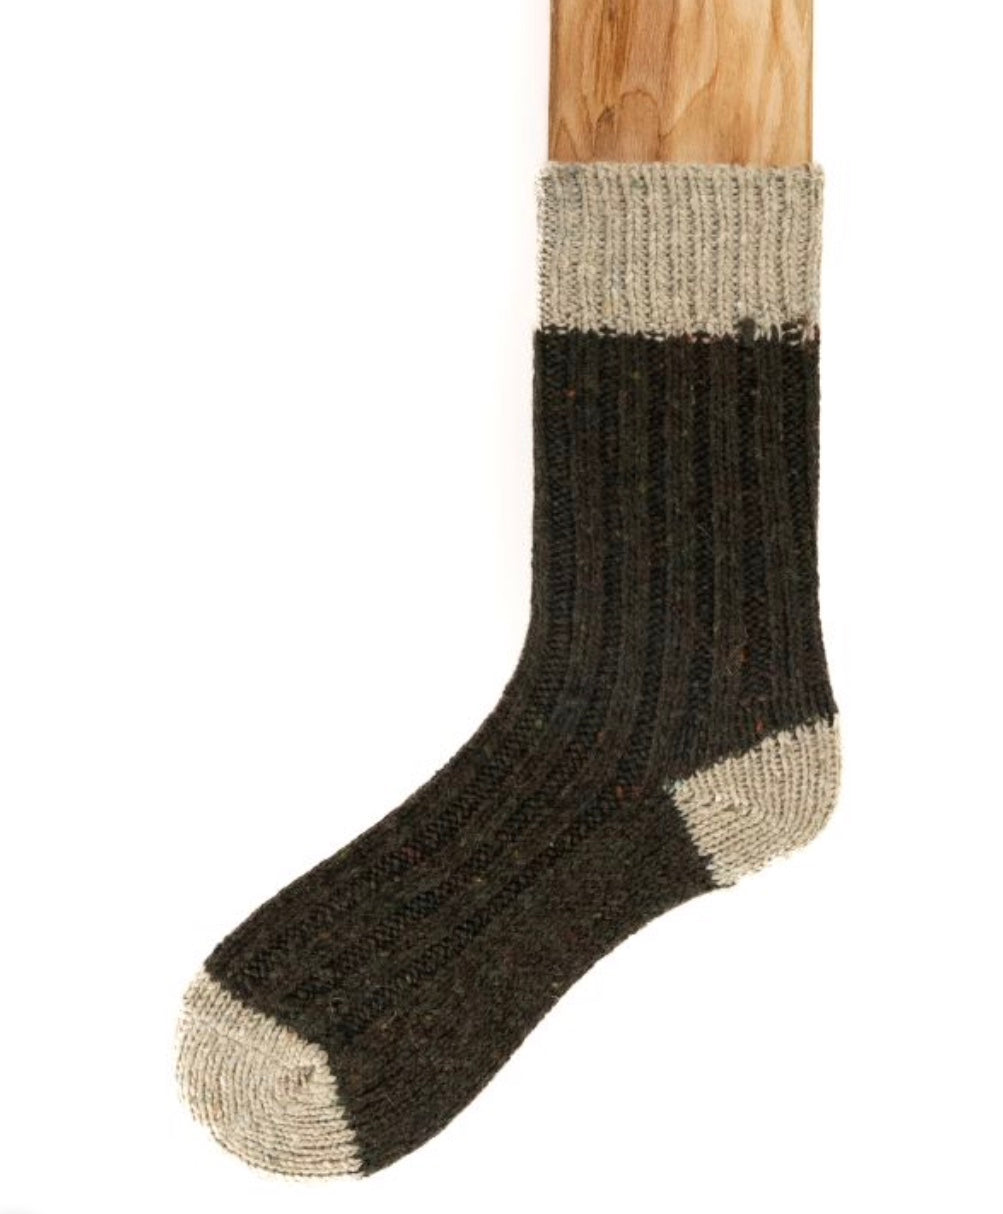 Connemara Socks - Wool Blend- Two Toned